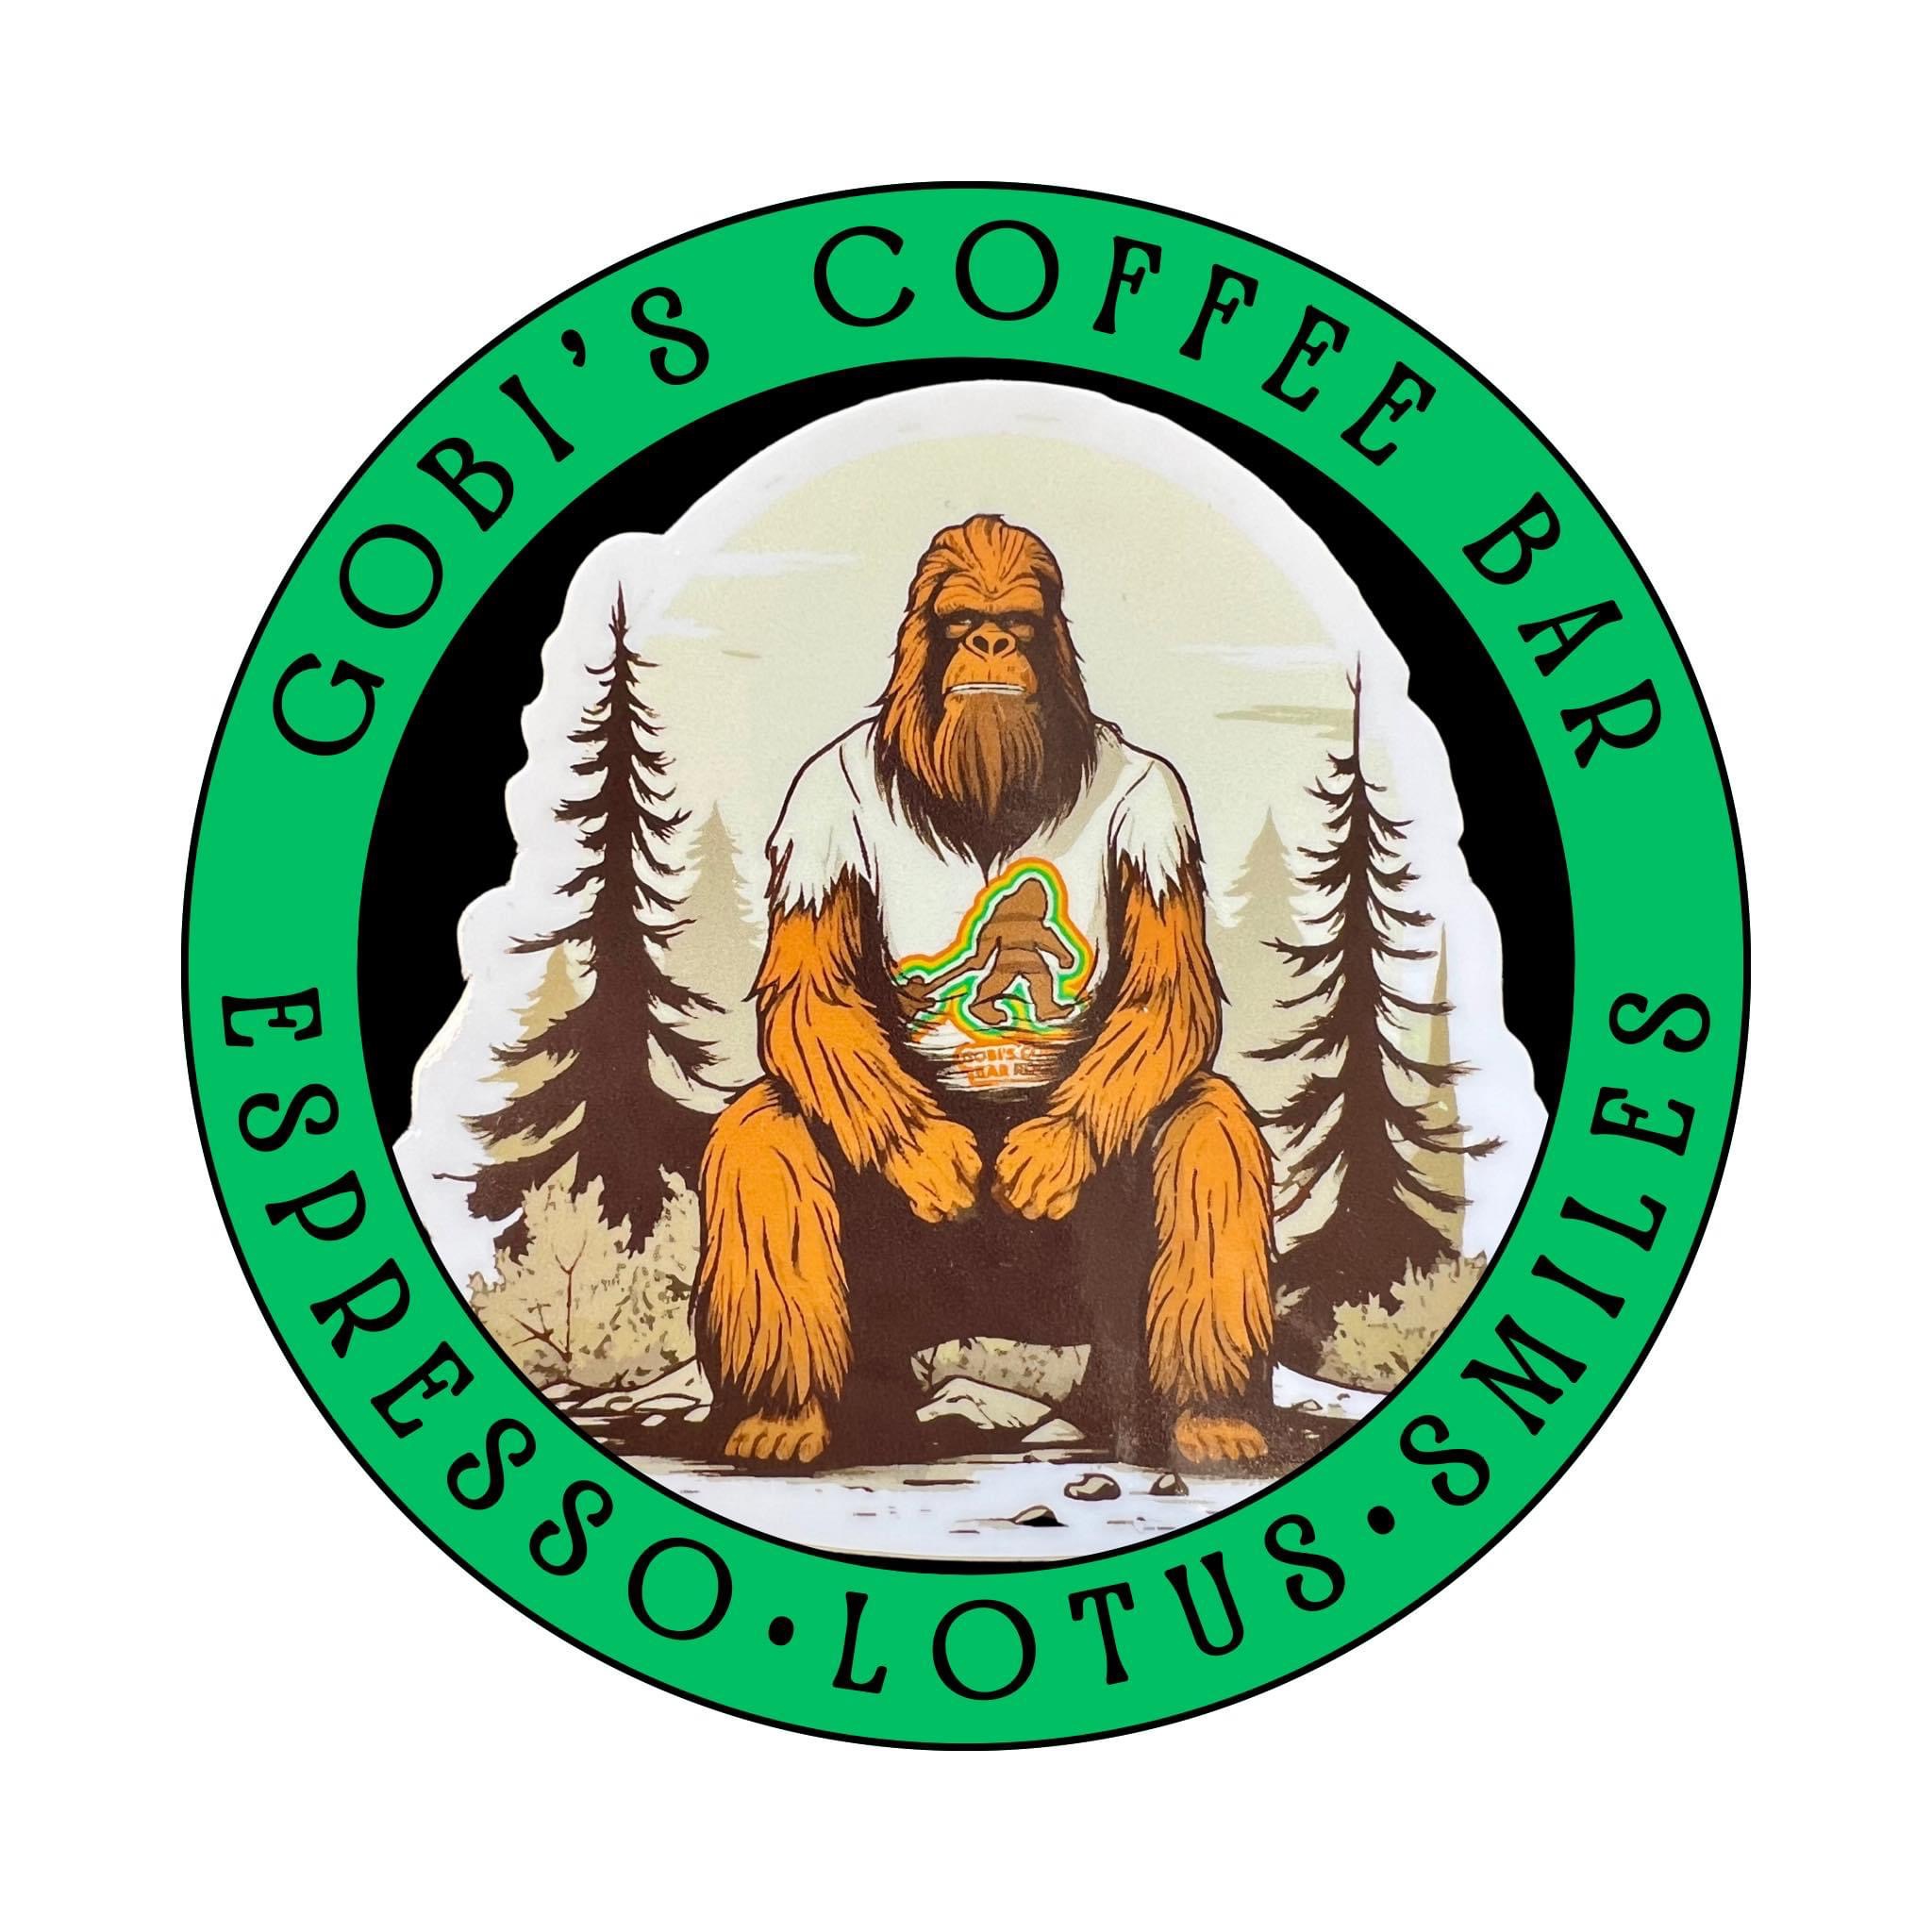 Gobi Coffee Bar